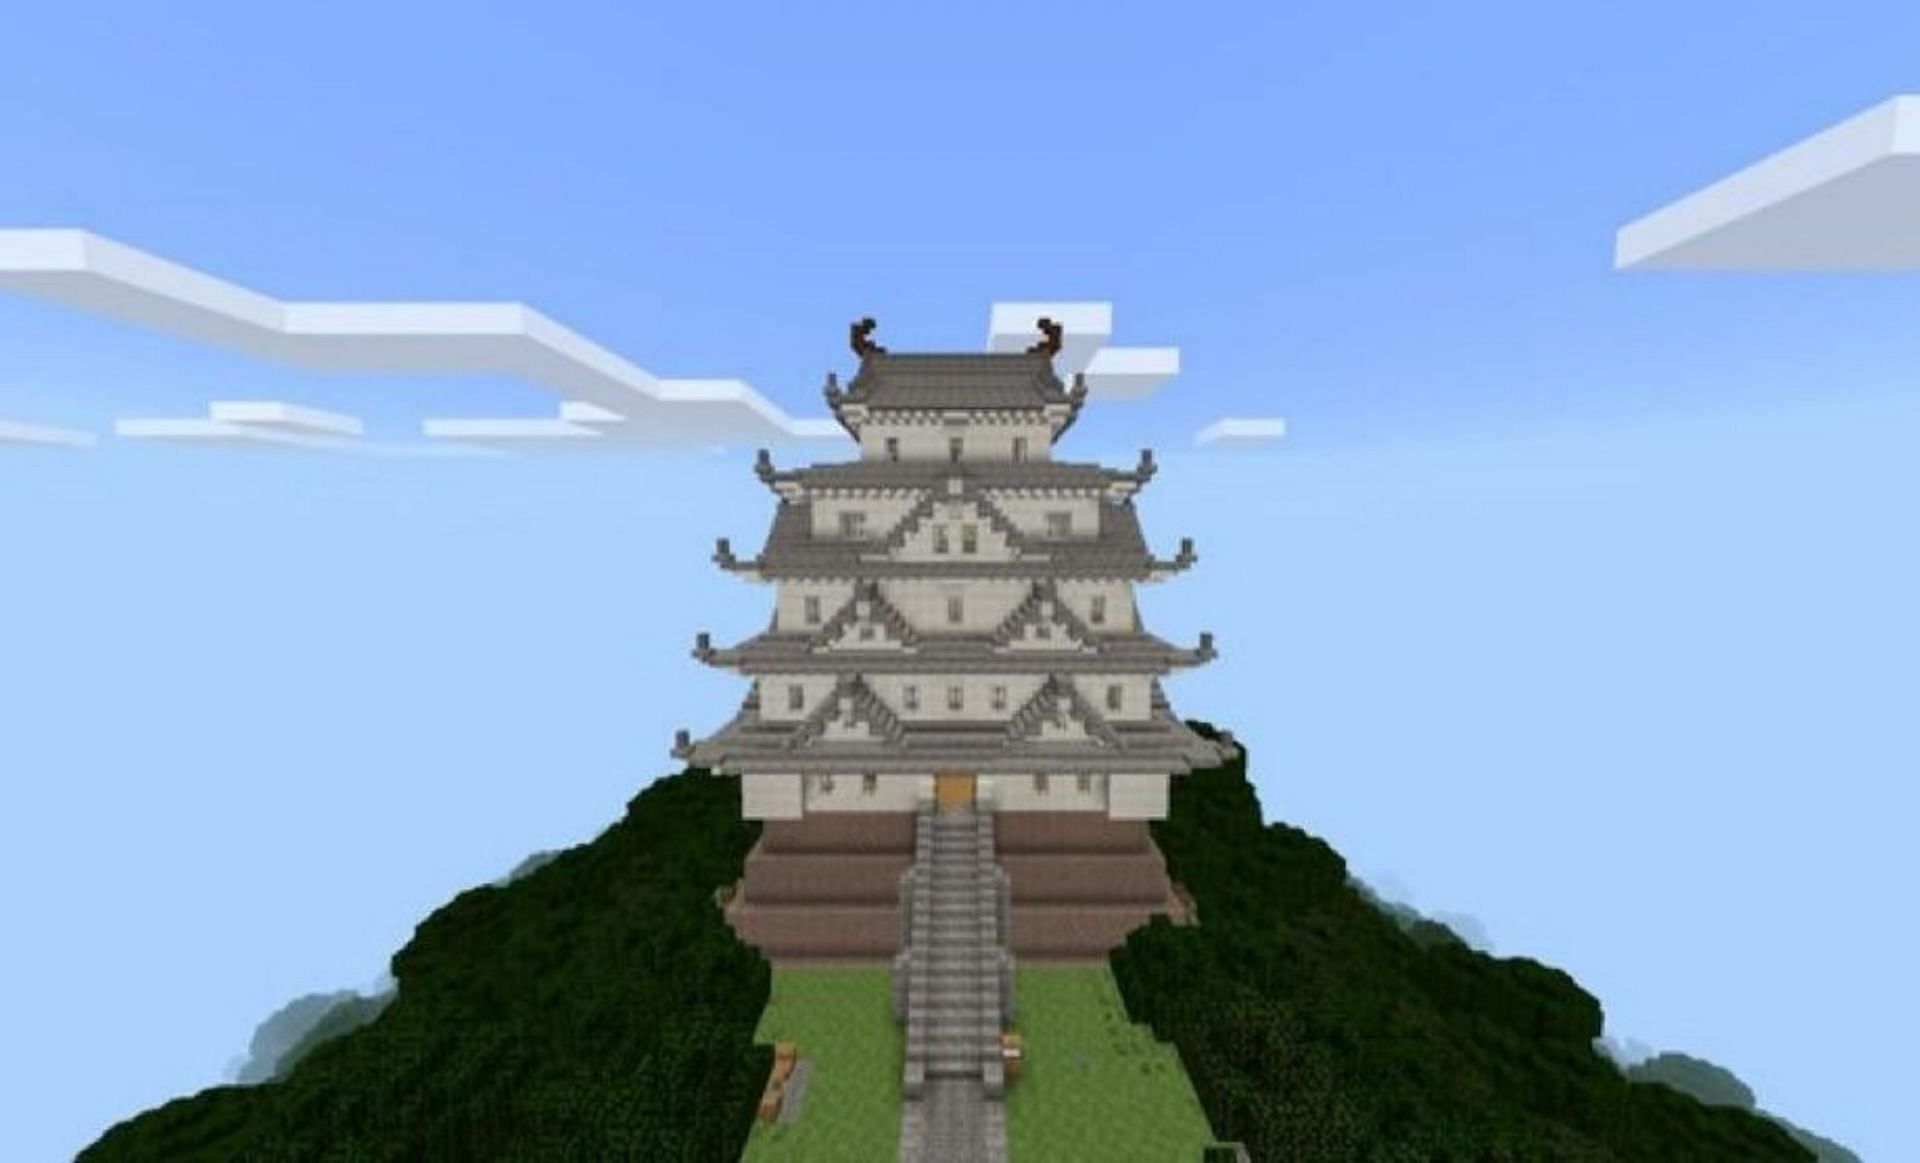 Minecraft: How To Build A Japanese Pagoda (Minecraft Build Tutorial)